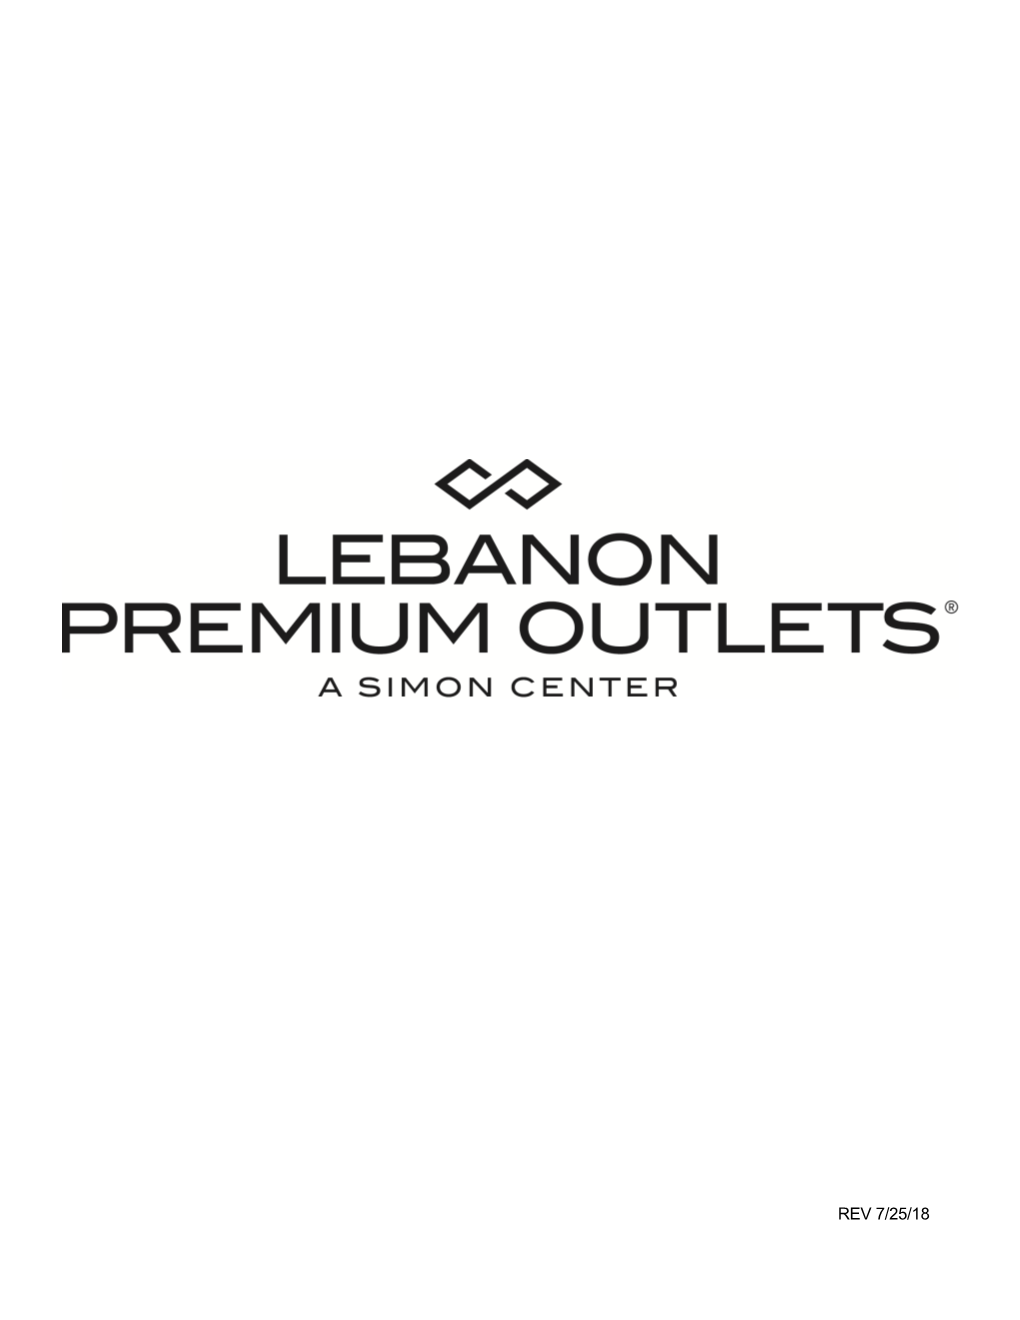 Lebanon Premium Outlets